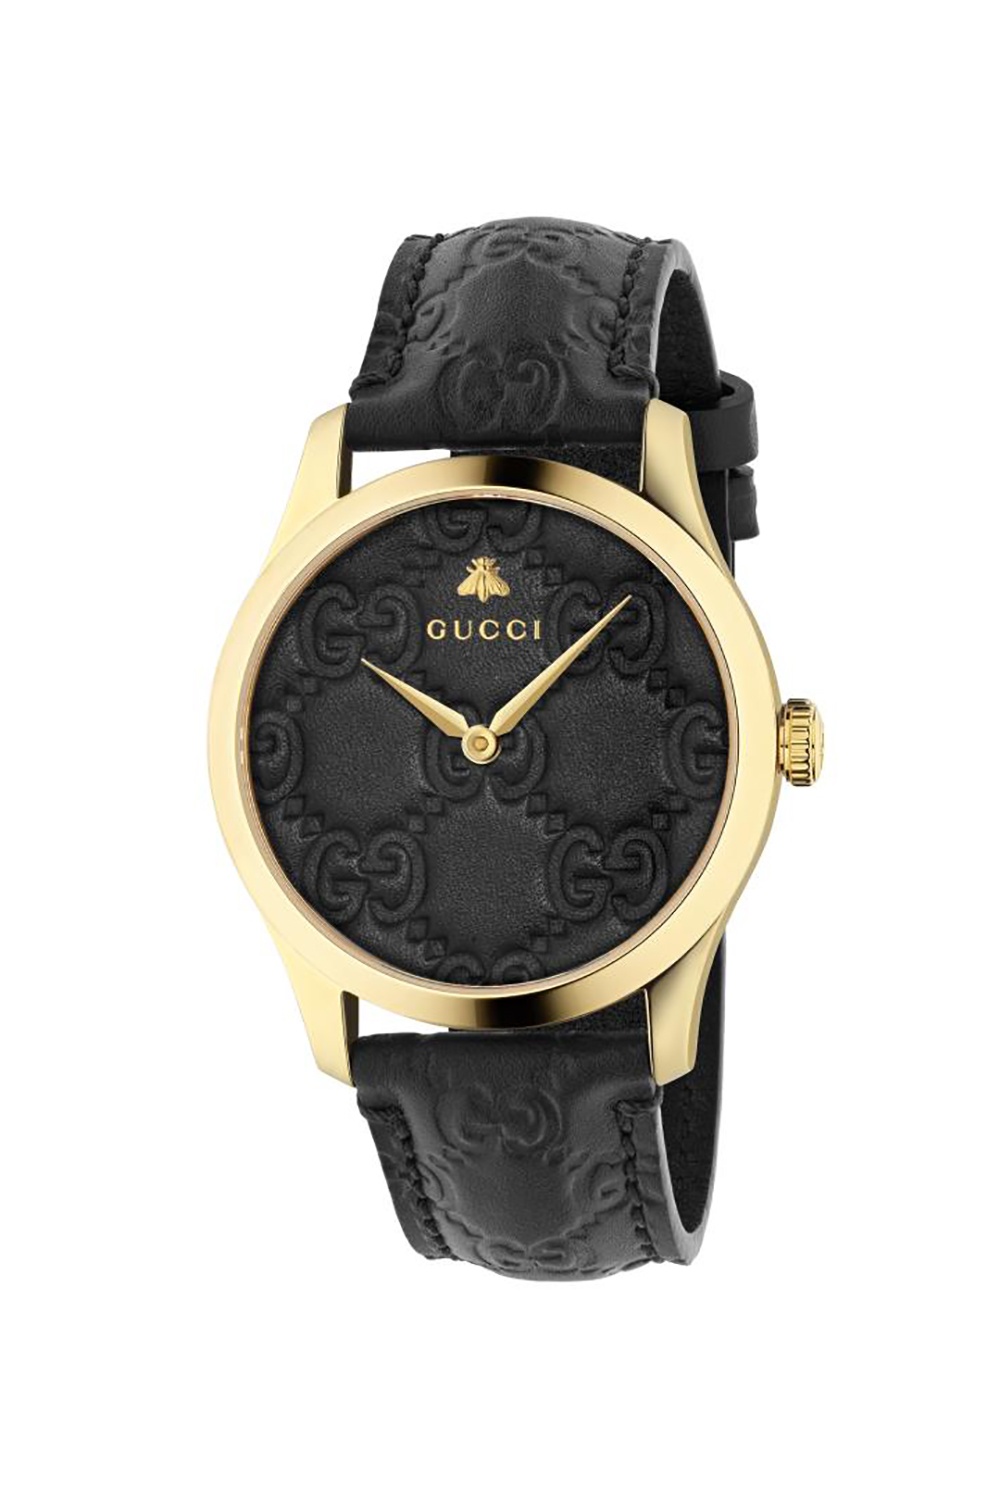 gucci g timeless watch gold